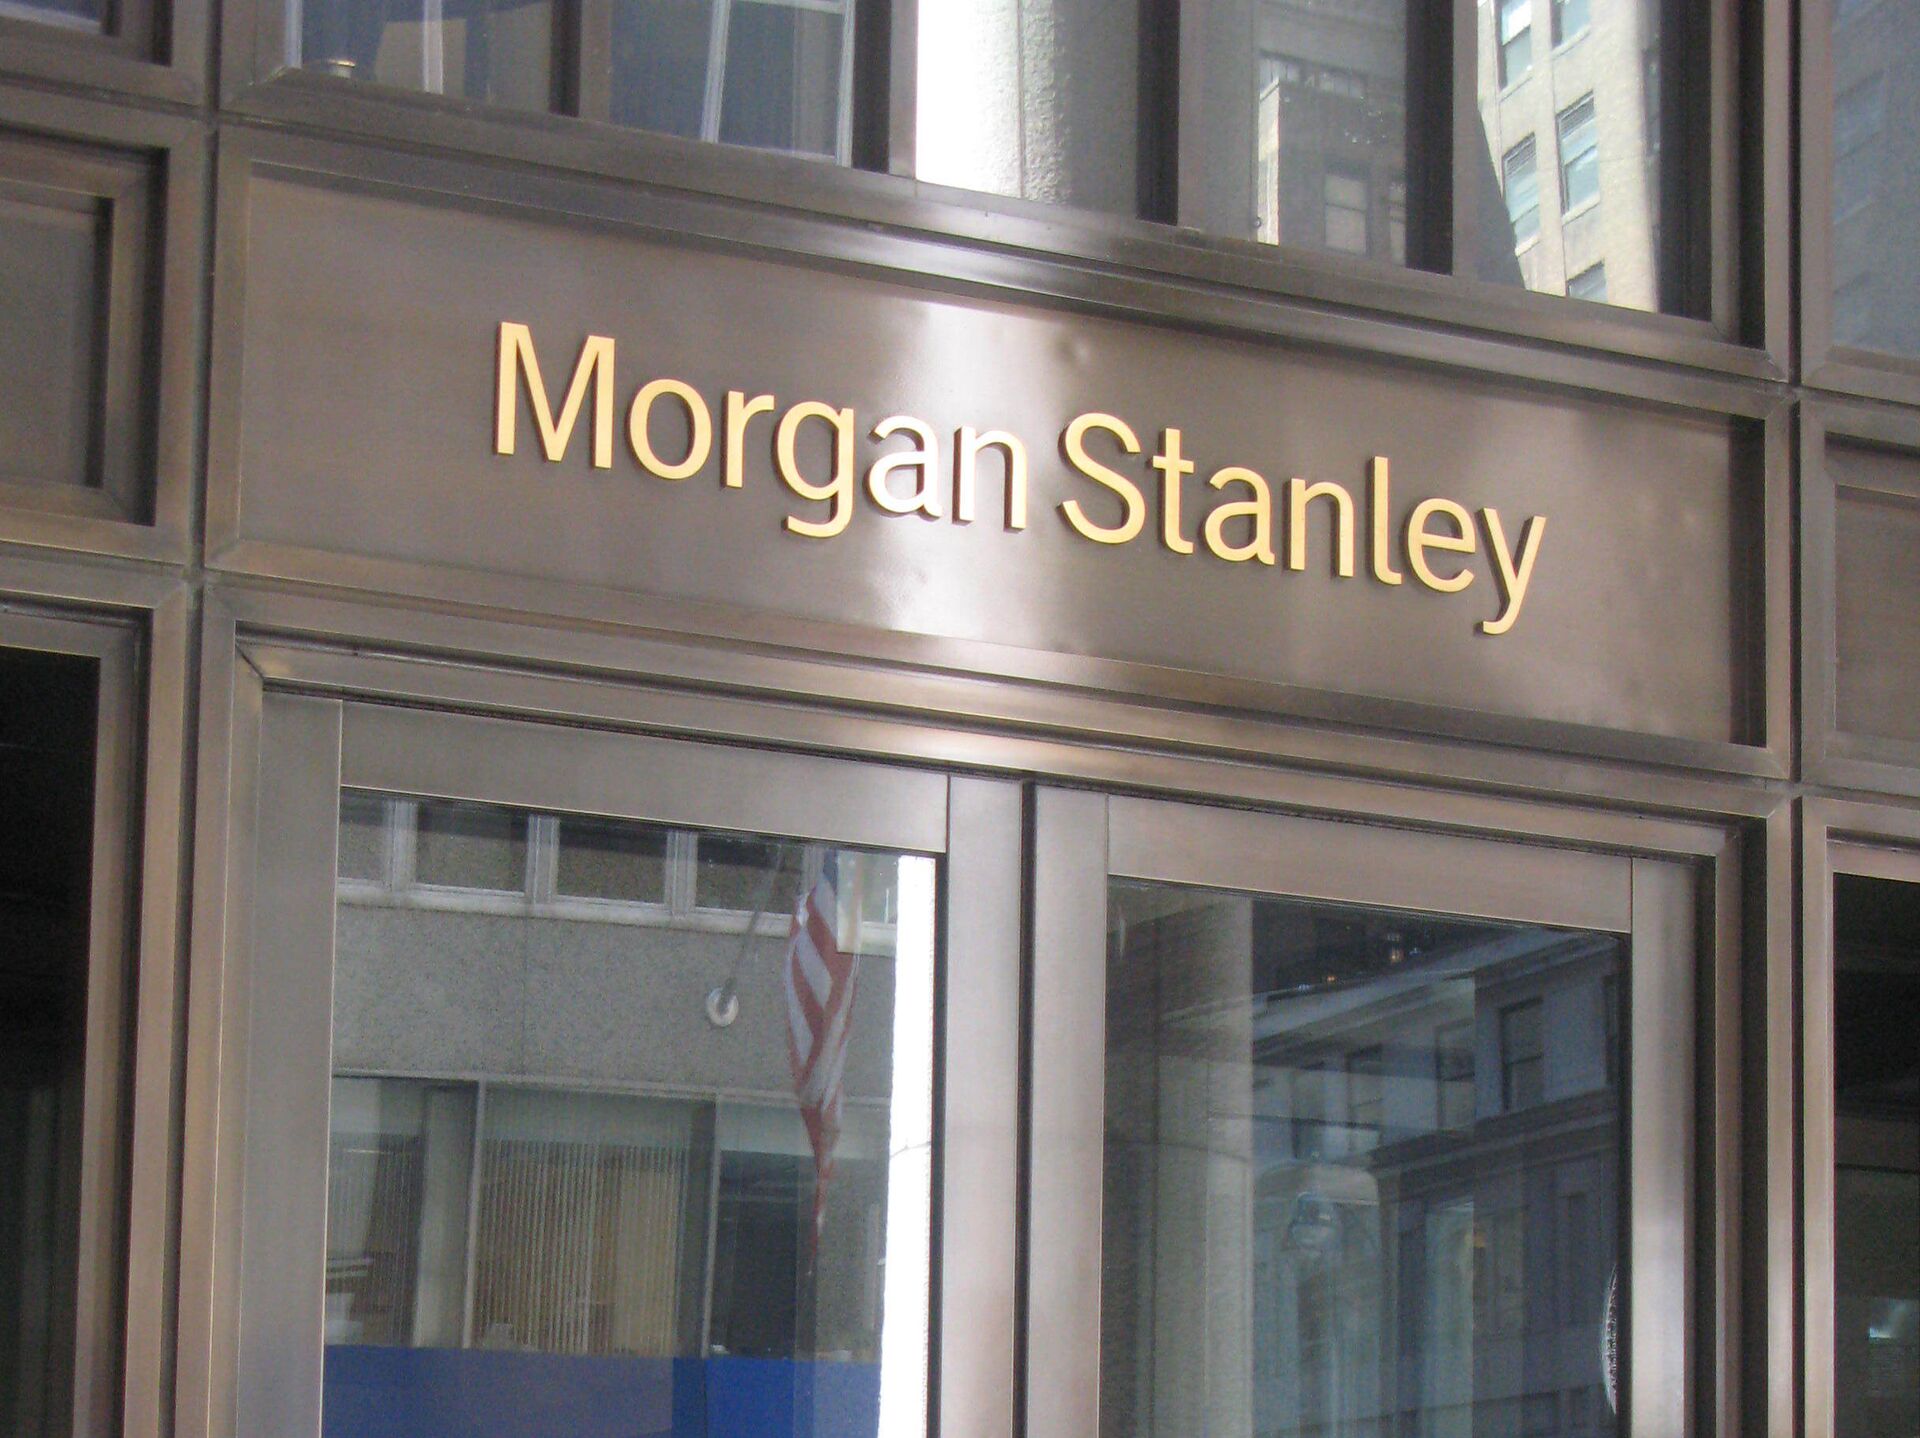 %Офис банка Morgan Stanley - ПРАЙМ, 1920, 15.06.2021